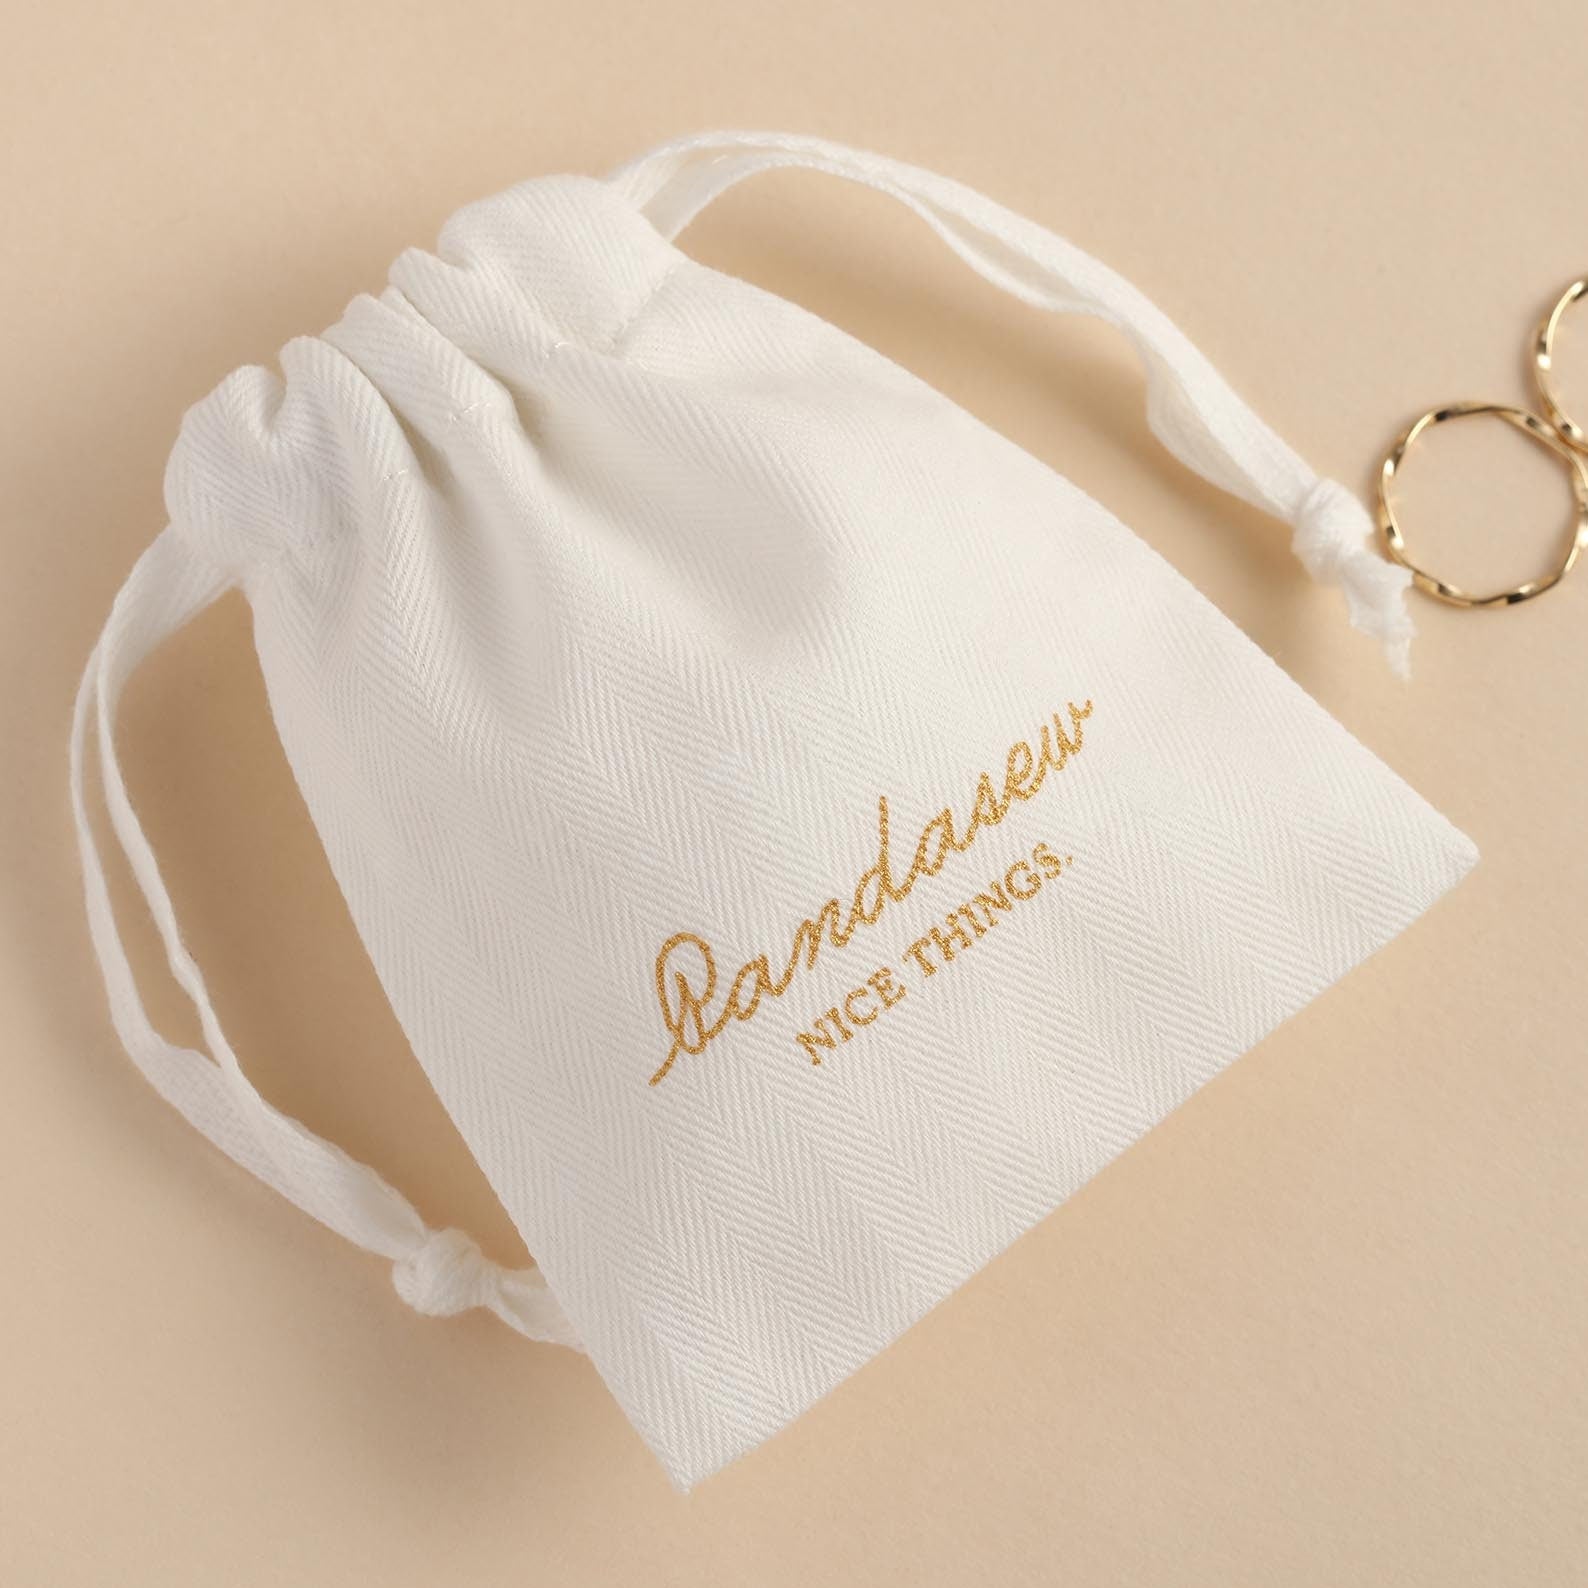 Silkscreen logo custom on jewelry pouch